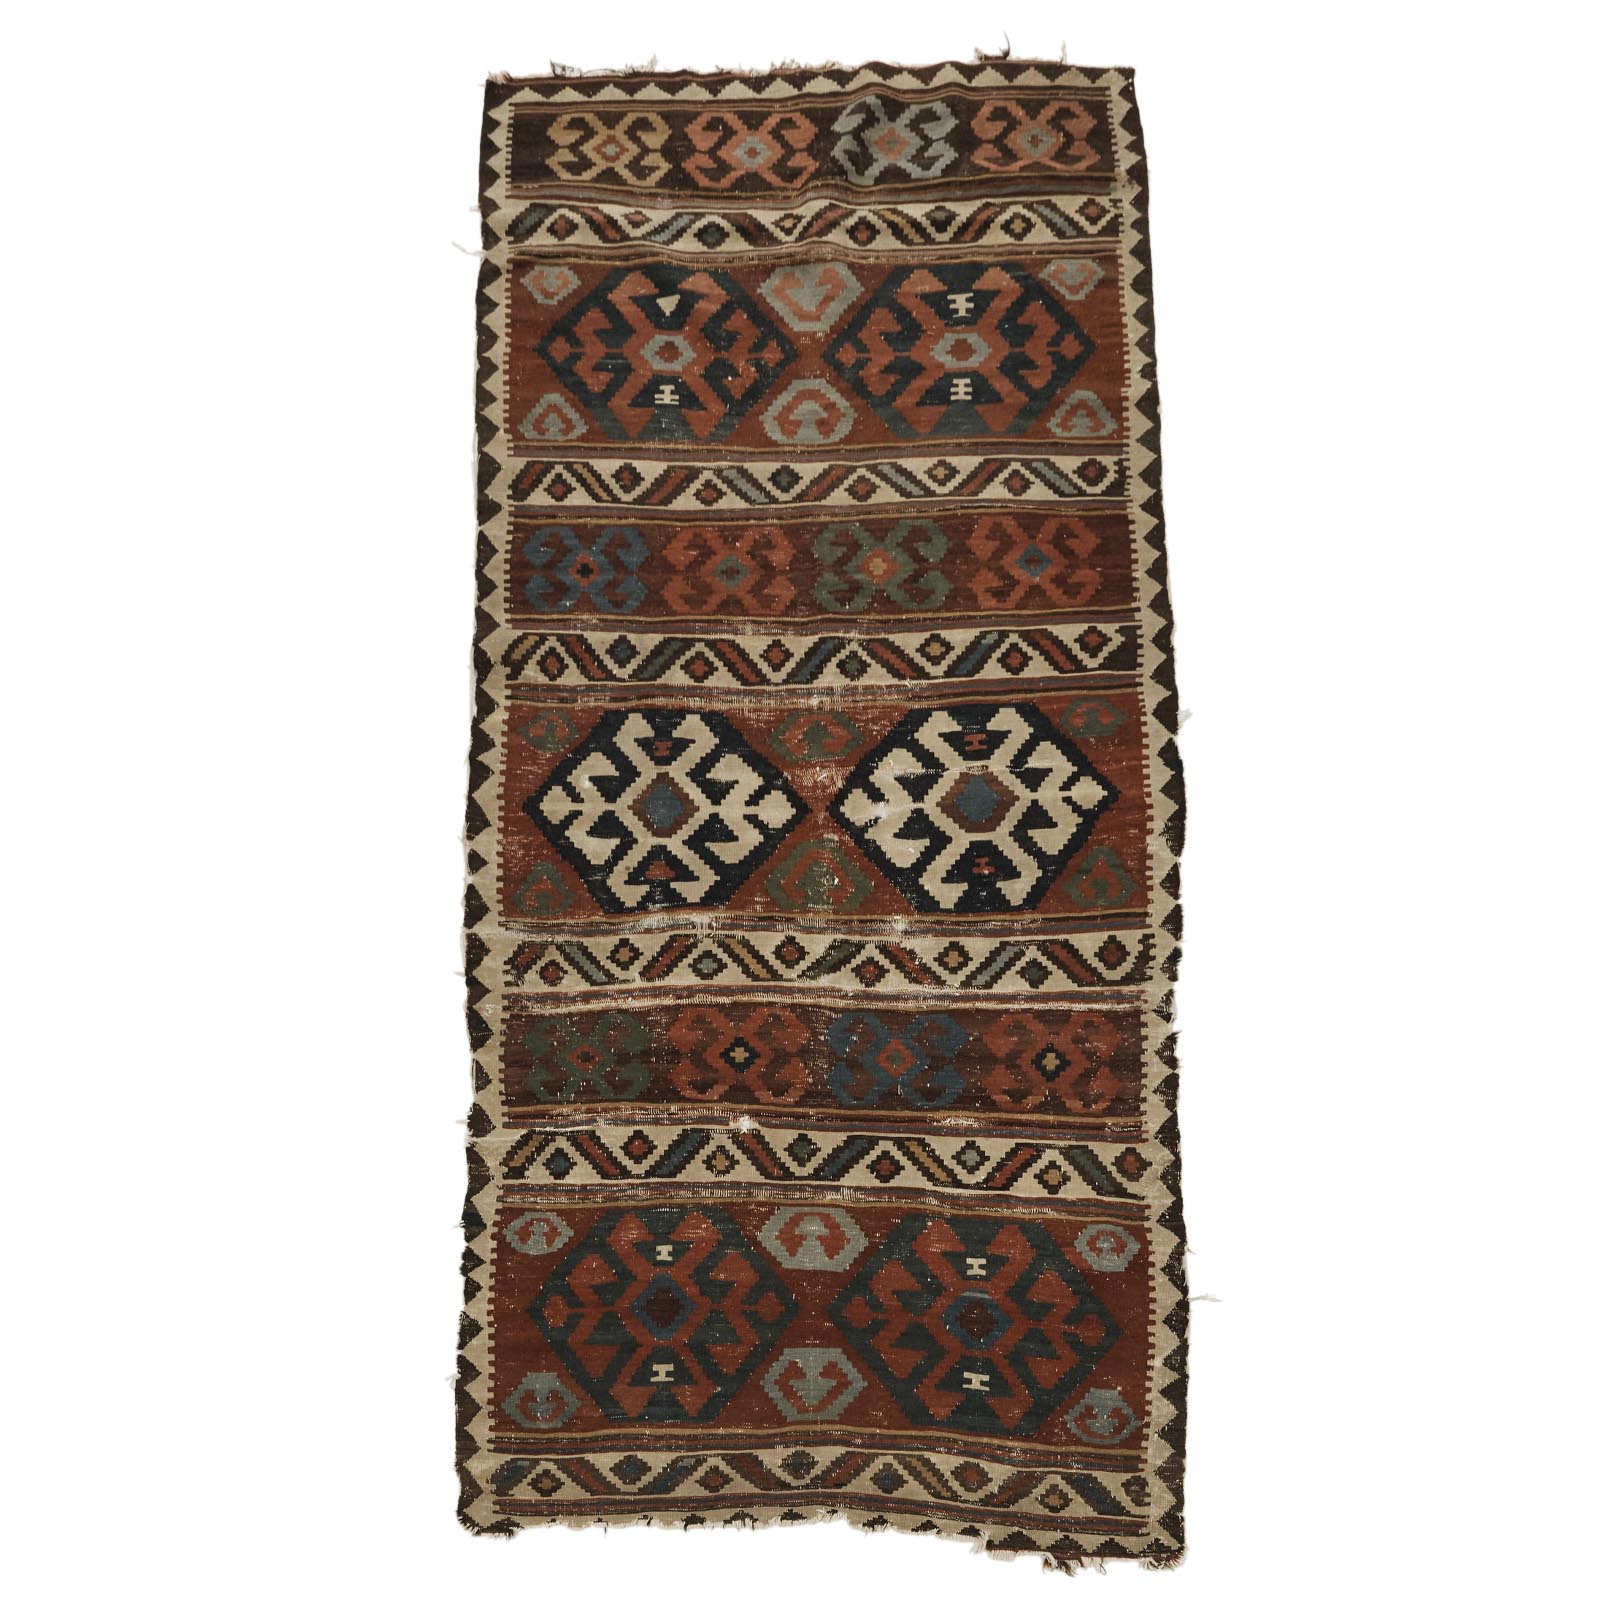 Shahsavan Kelim Long Rug, North Persian or Azerbaijan, c.1920